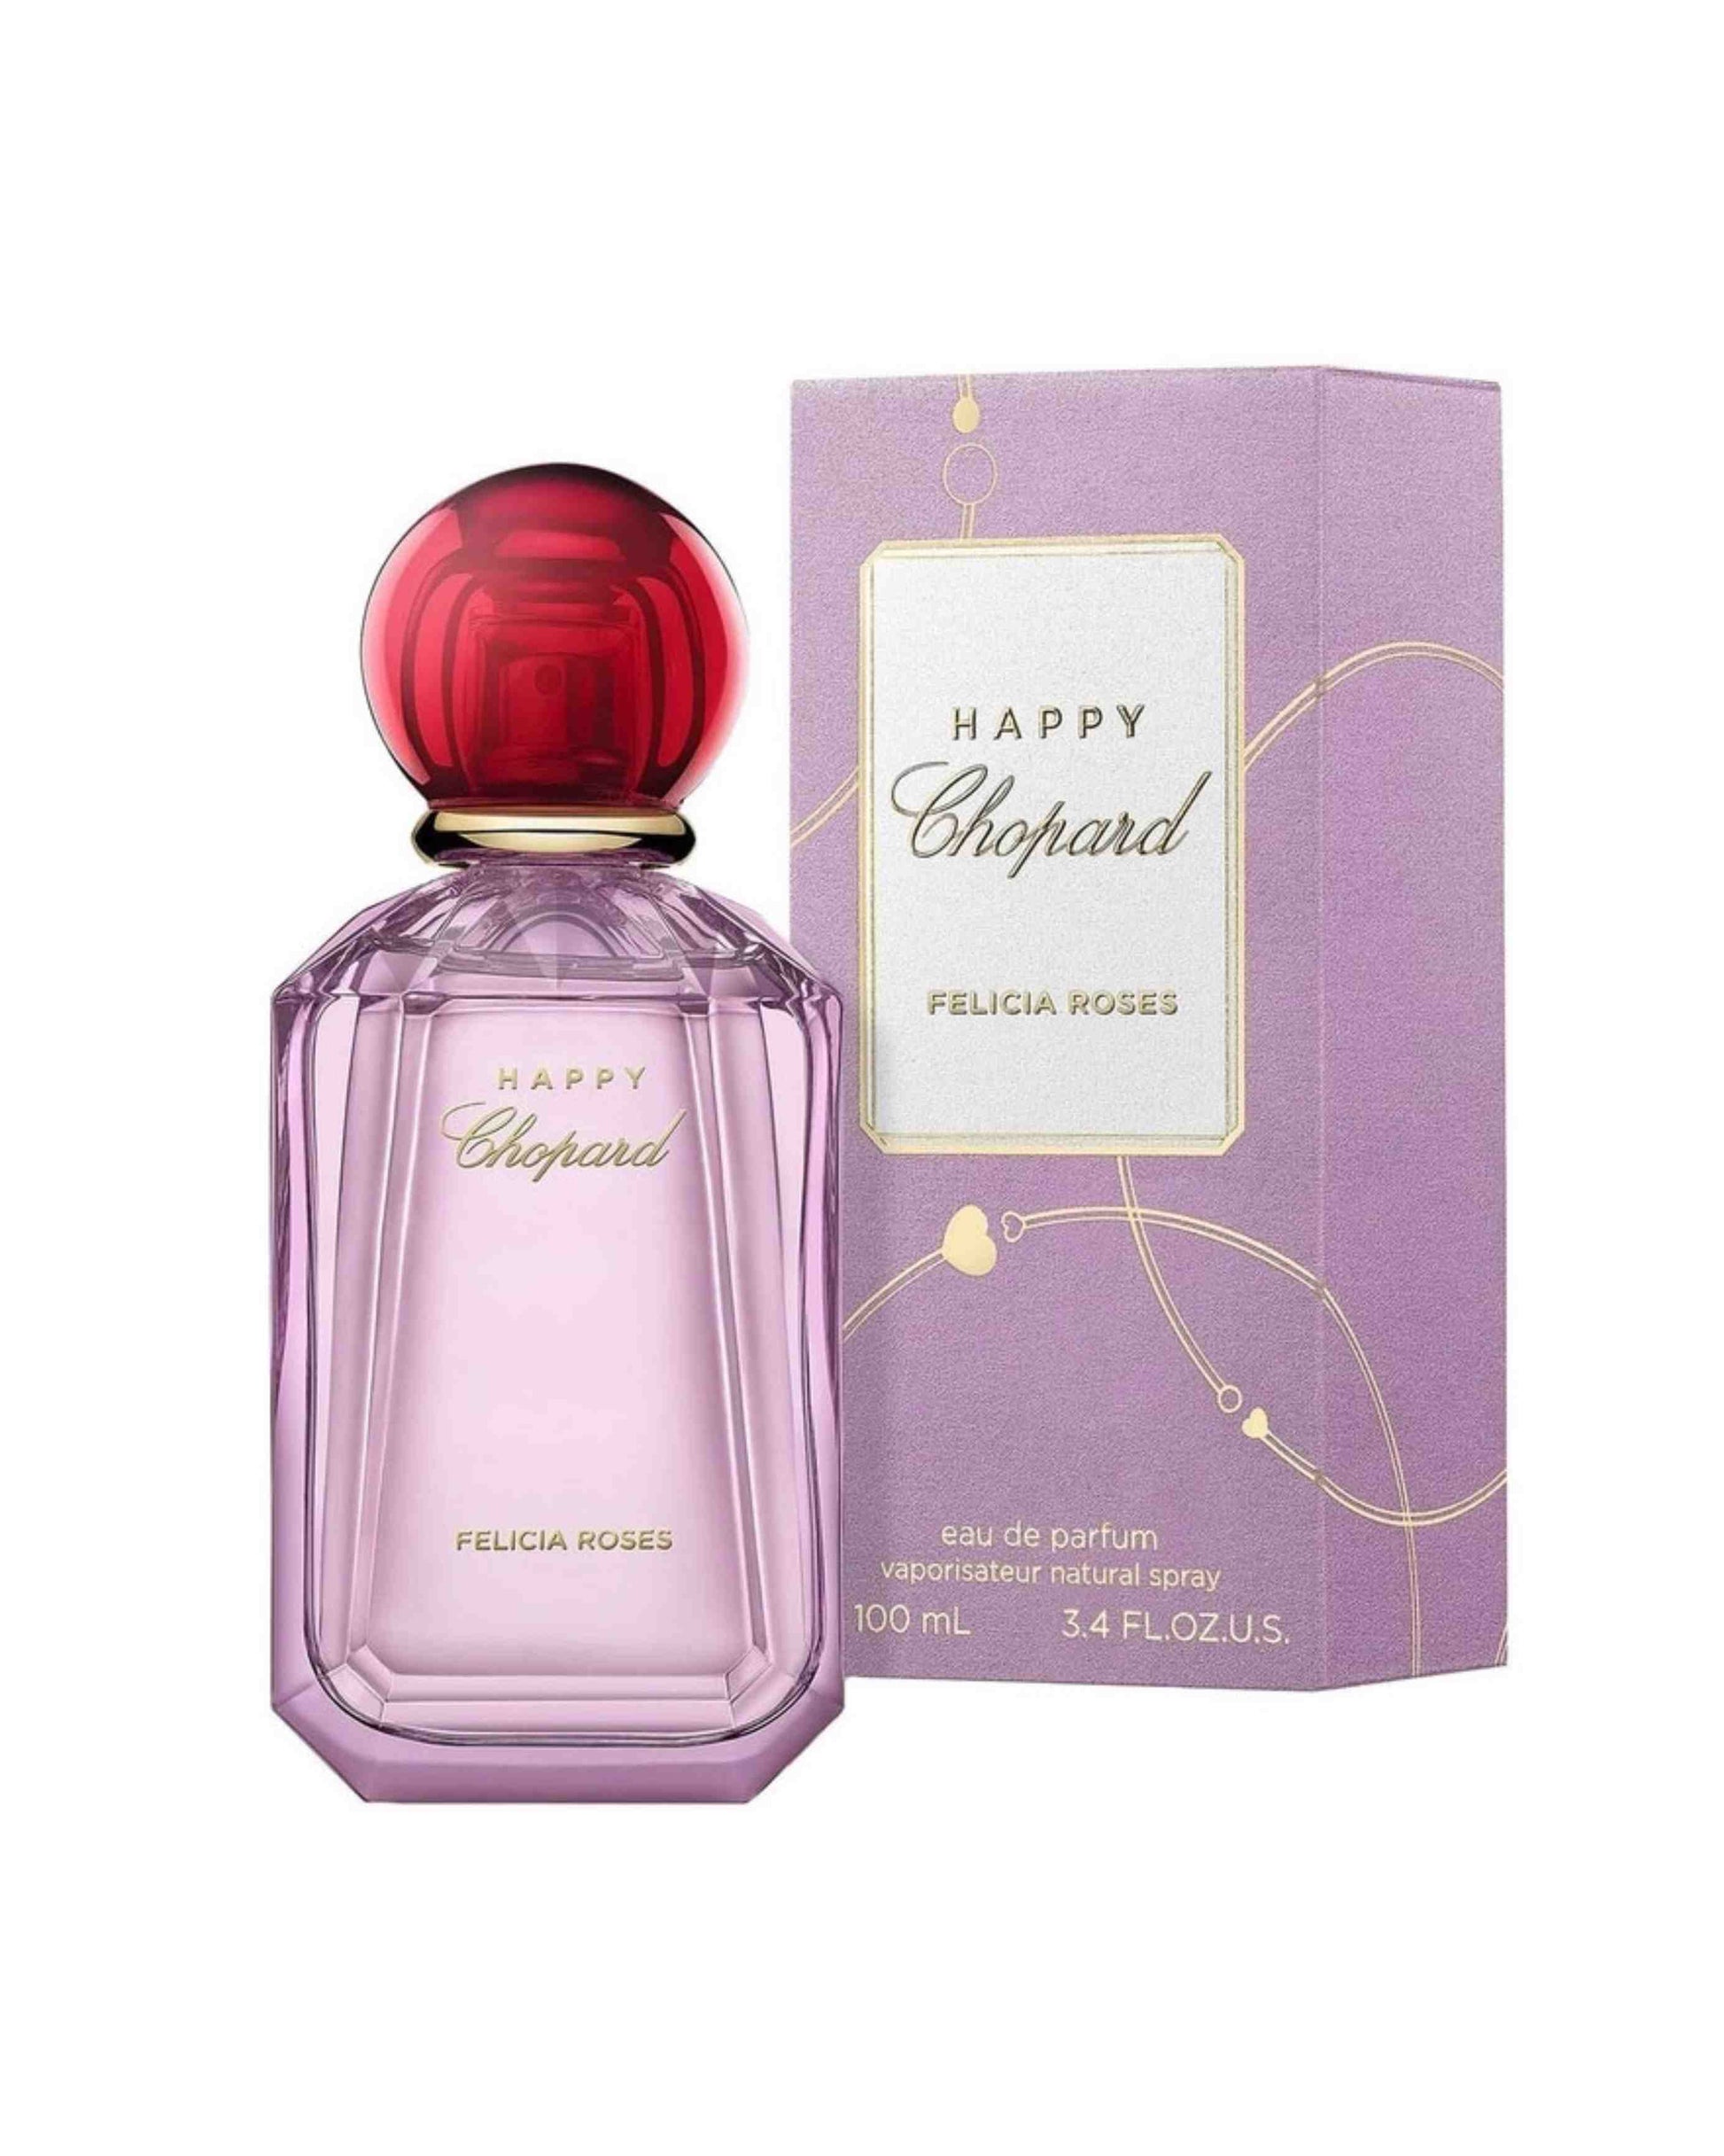 CHOPARD – HAPPY FELICIA ROSES–foryou–prix de foryou parfumurie en ligne–vente de parfum original au Maroc–prix de foryou parfum